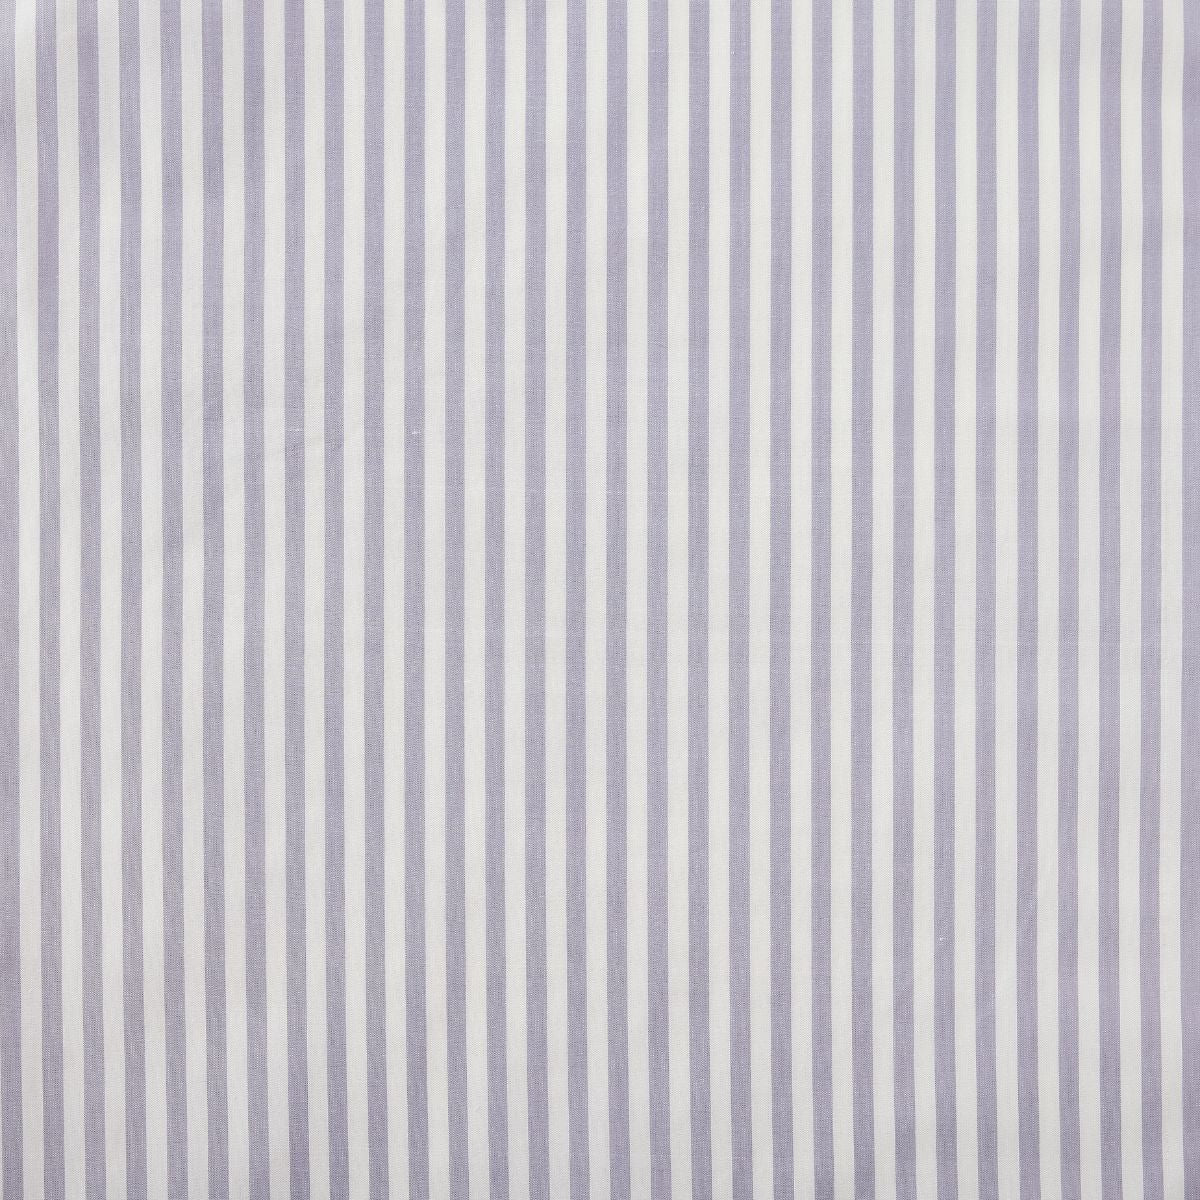 Noelle Stripe Fabric in Lilac